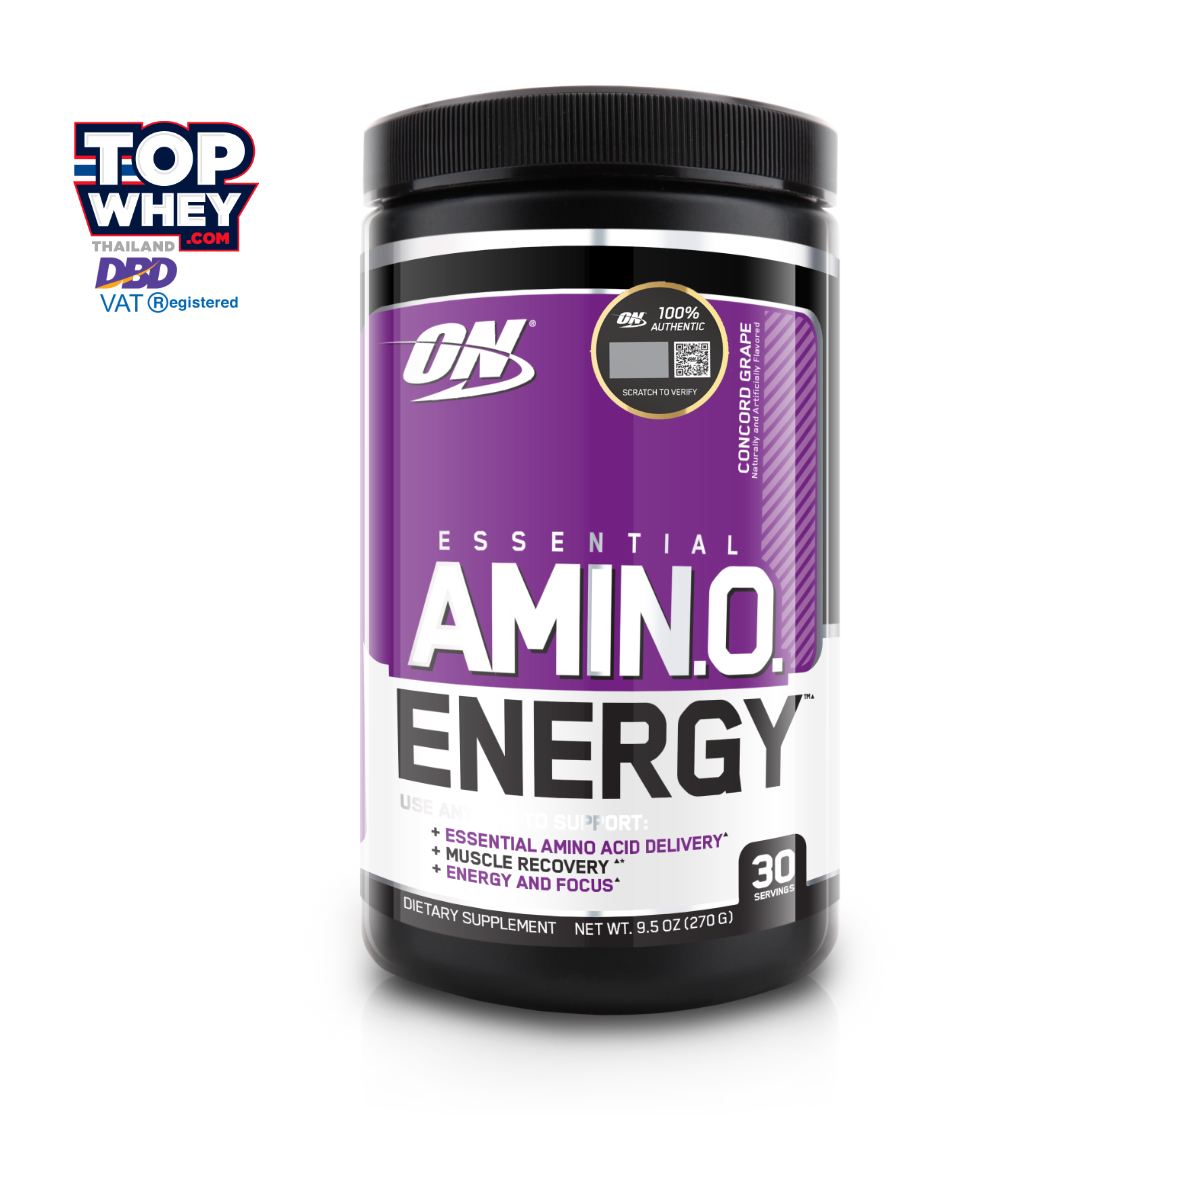 Optimum Nutrition Amino Energy 30 Servings -  Concord Grape – กรดอะมิโน ช่วยให้ร่างกายตื่นตัวสดชื่น  กล้ามเนื้อฟื้นตัวได้ไวขึ้น  ป้องกันการทำลายกล้ามเนื้อและกระตุ้นการสังเคราะห์โปรตีนเพื่อสร้างกล้ามเนื้อ